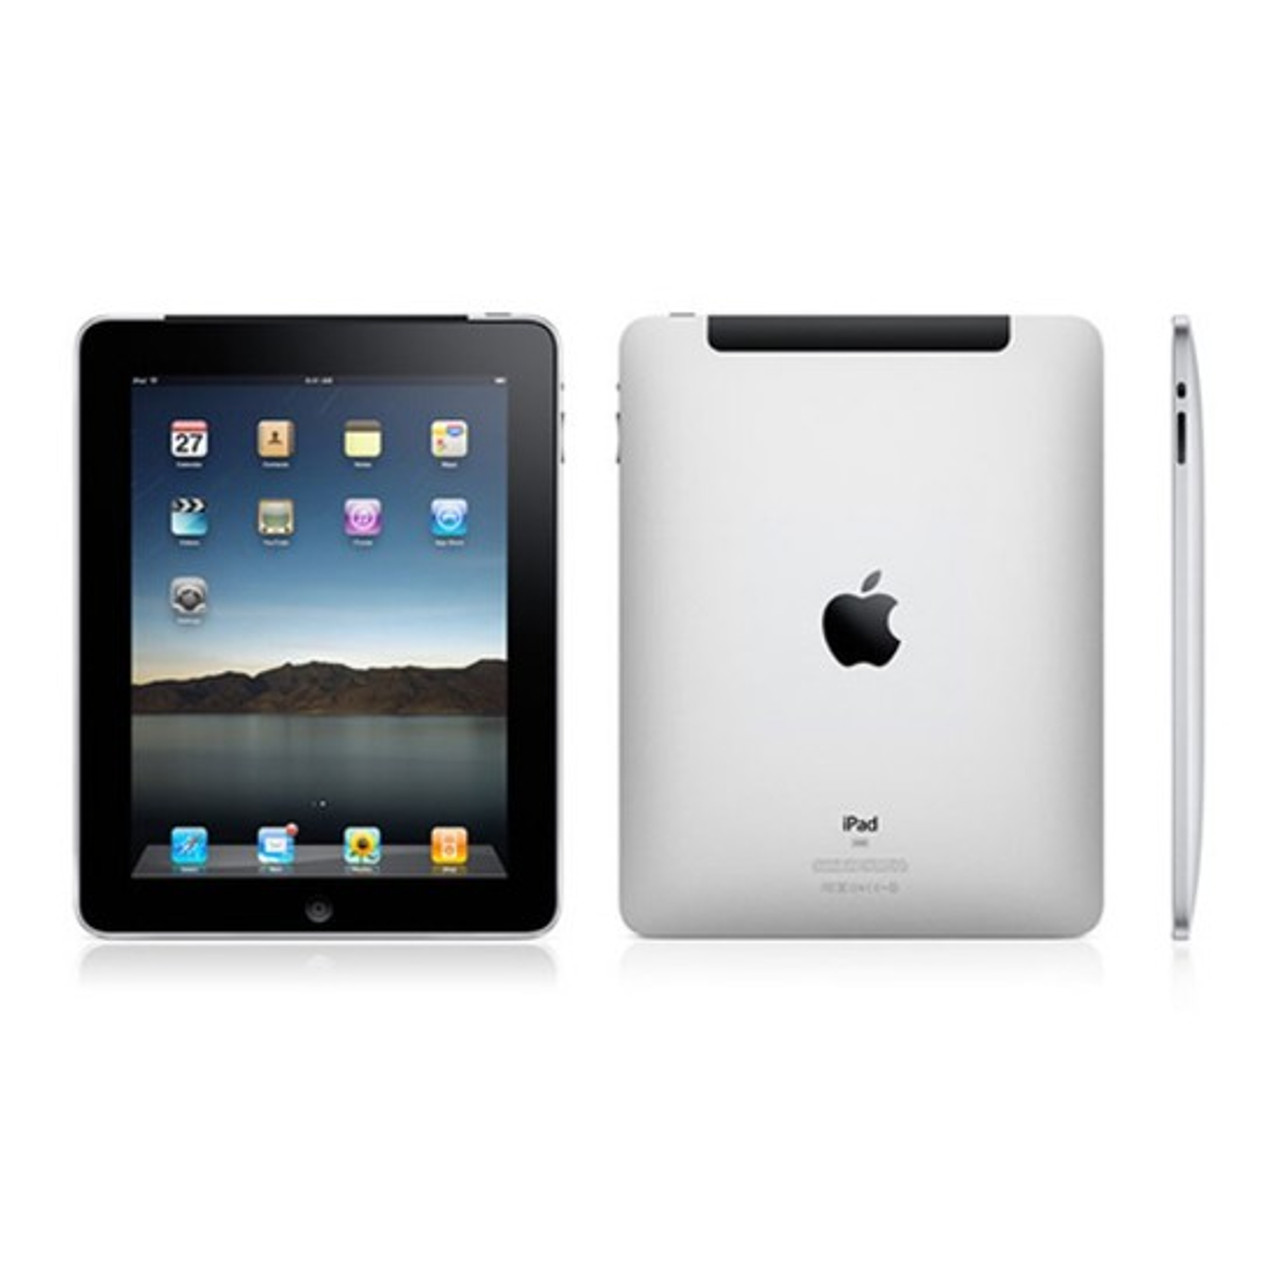 Apple iPad 3 32GB WiFi + 4G (3rd Generation) - Black